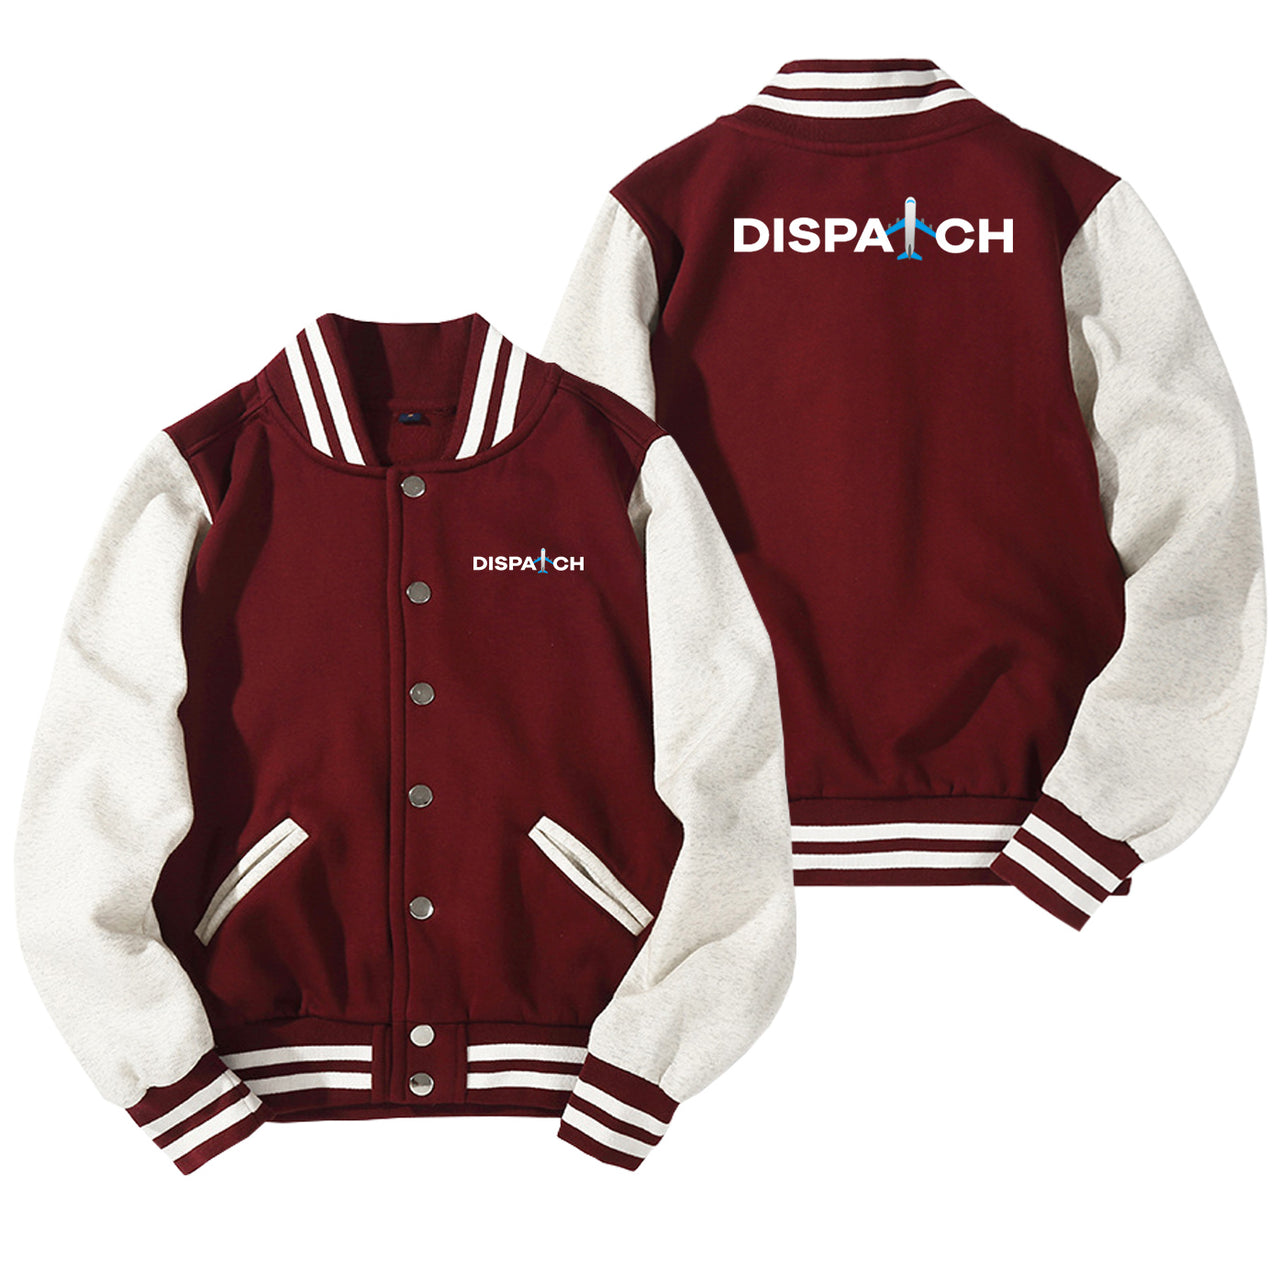 Dispatch Designed Baseball Style Jackets